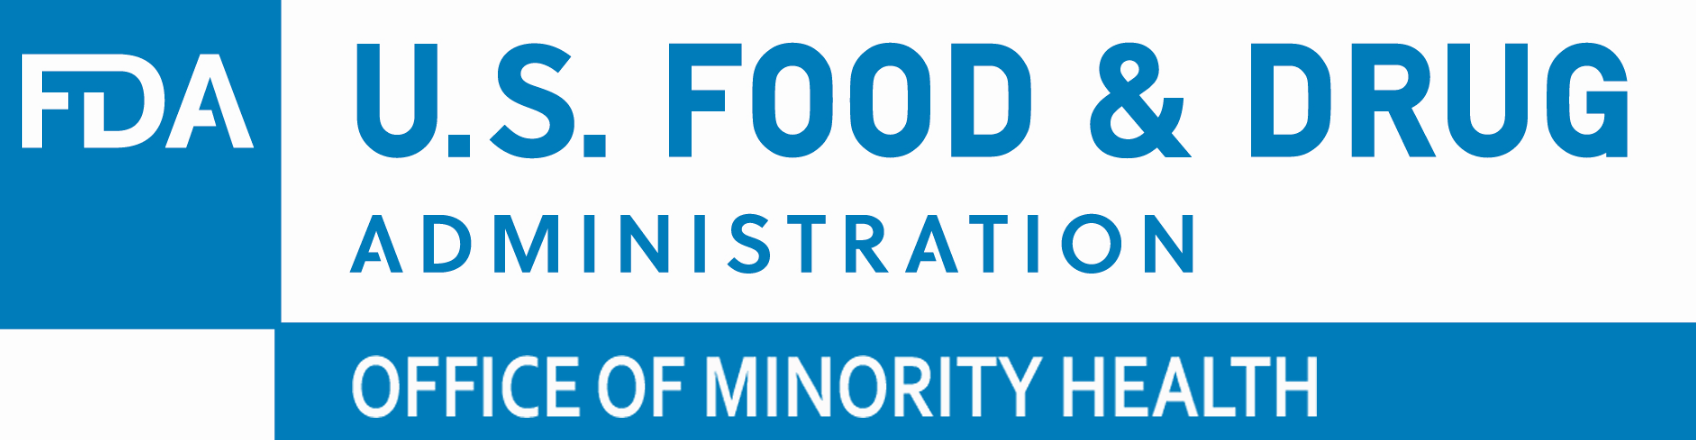 FDA Office of Minority Health Logo